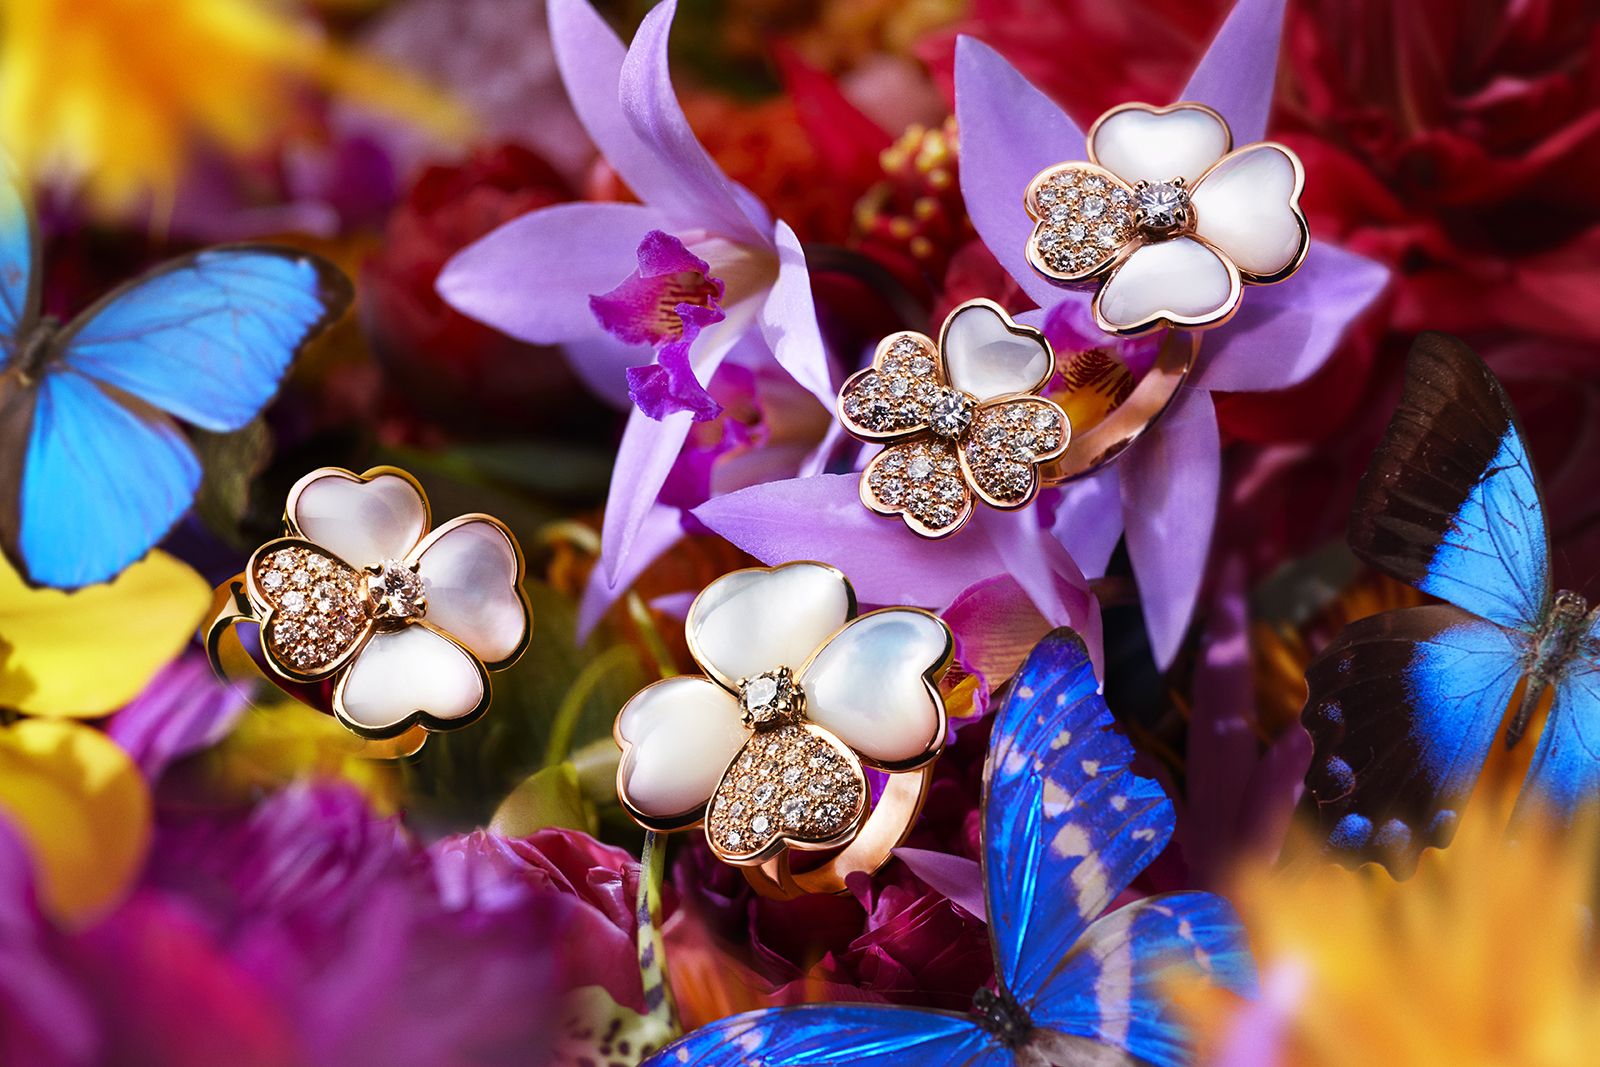 Van Cleef & Arpels floral jewellery creations on display at the Florae exhibition